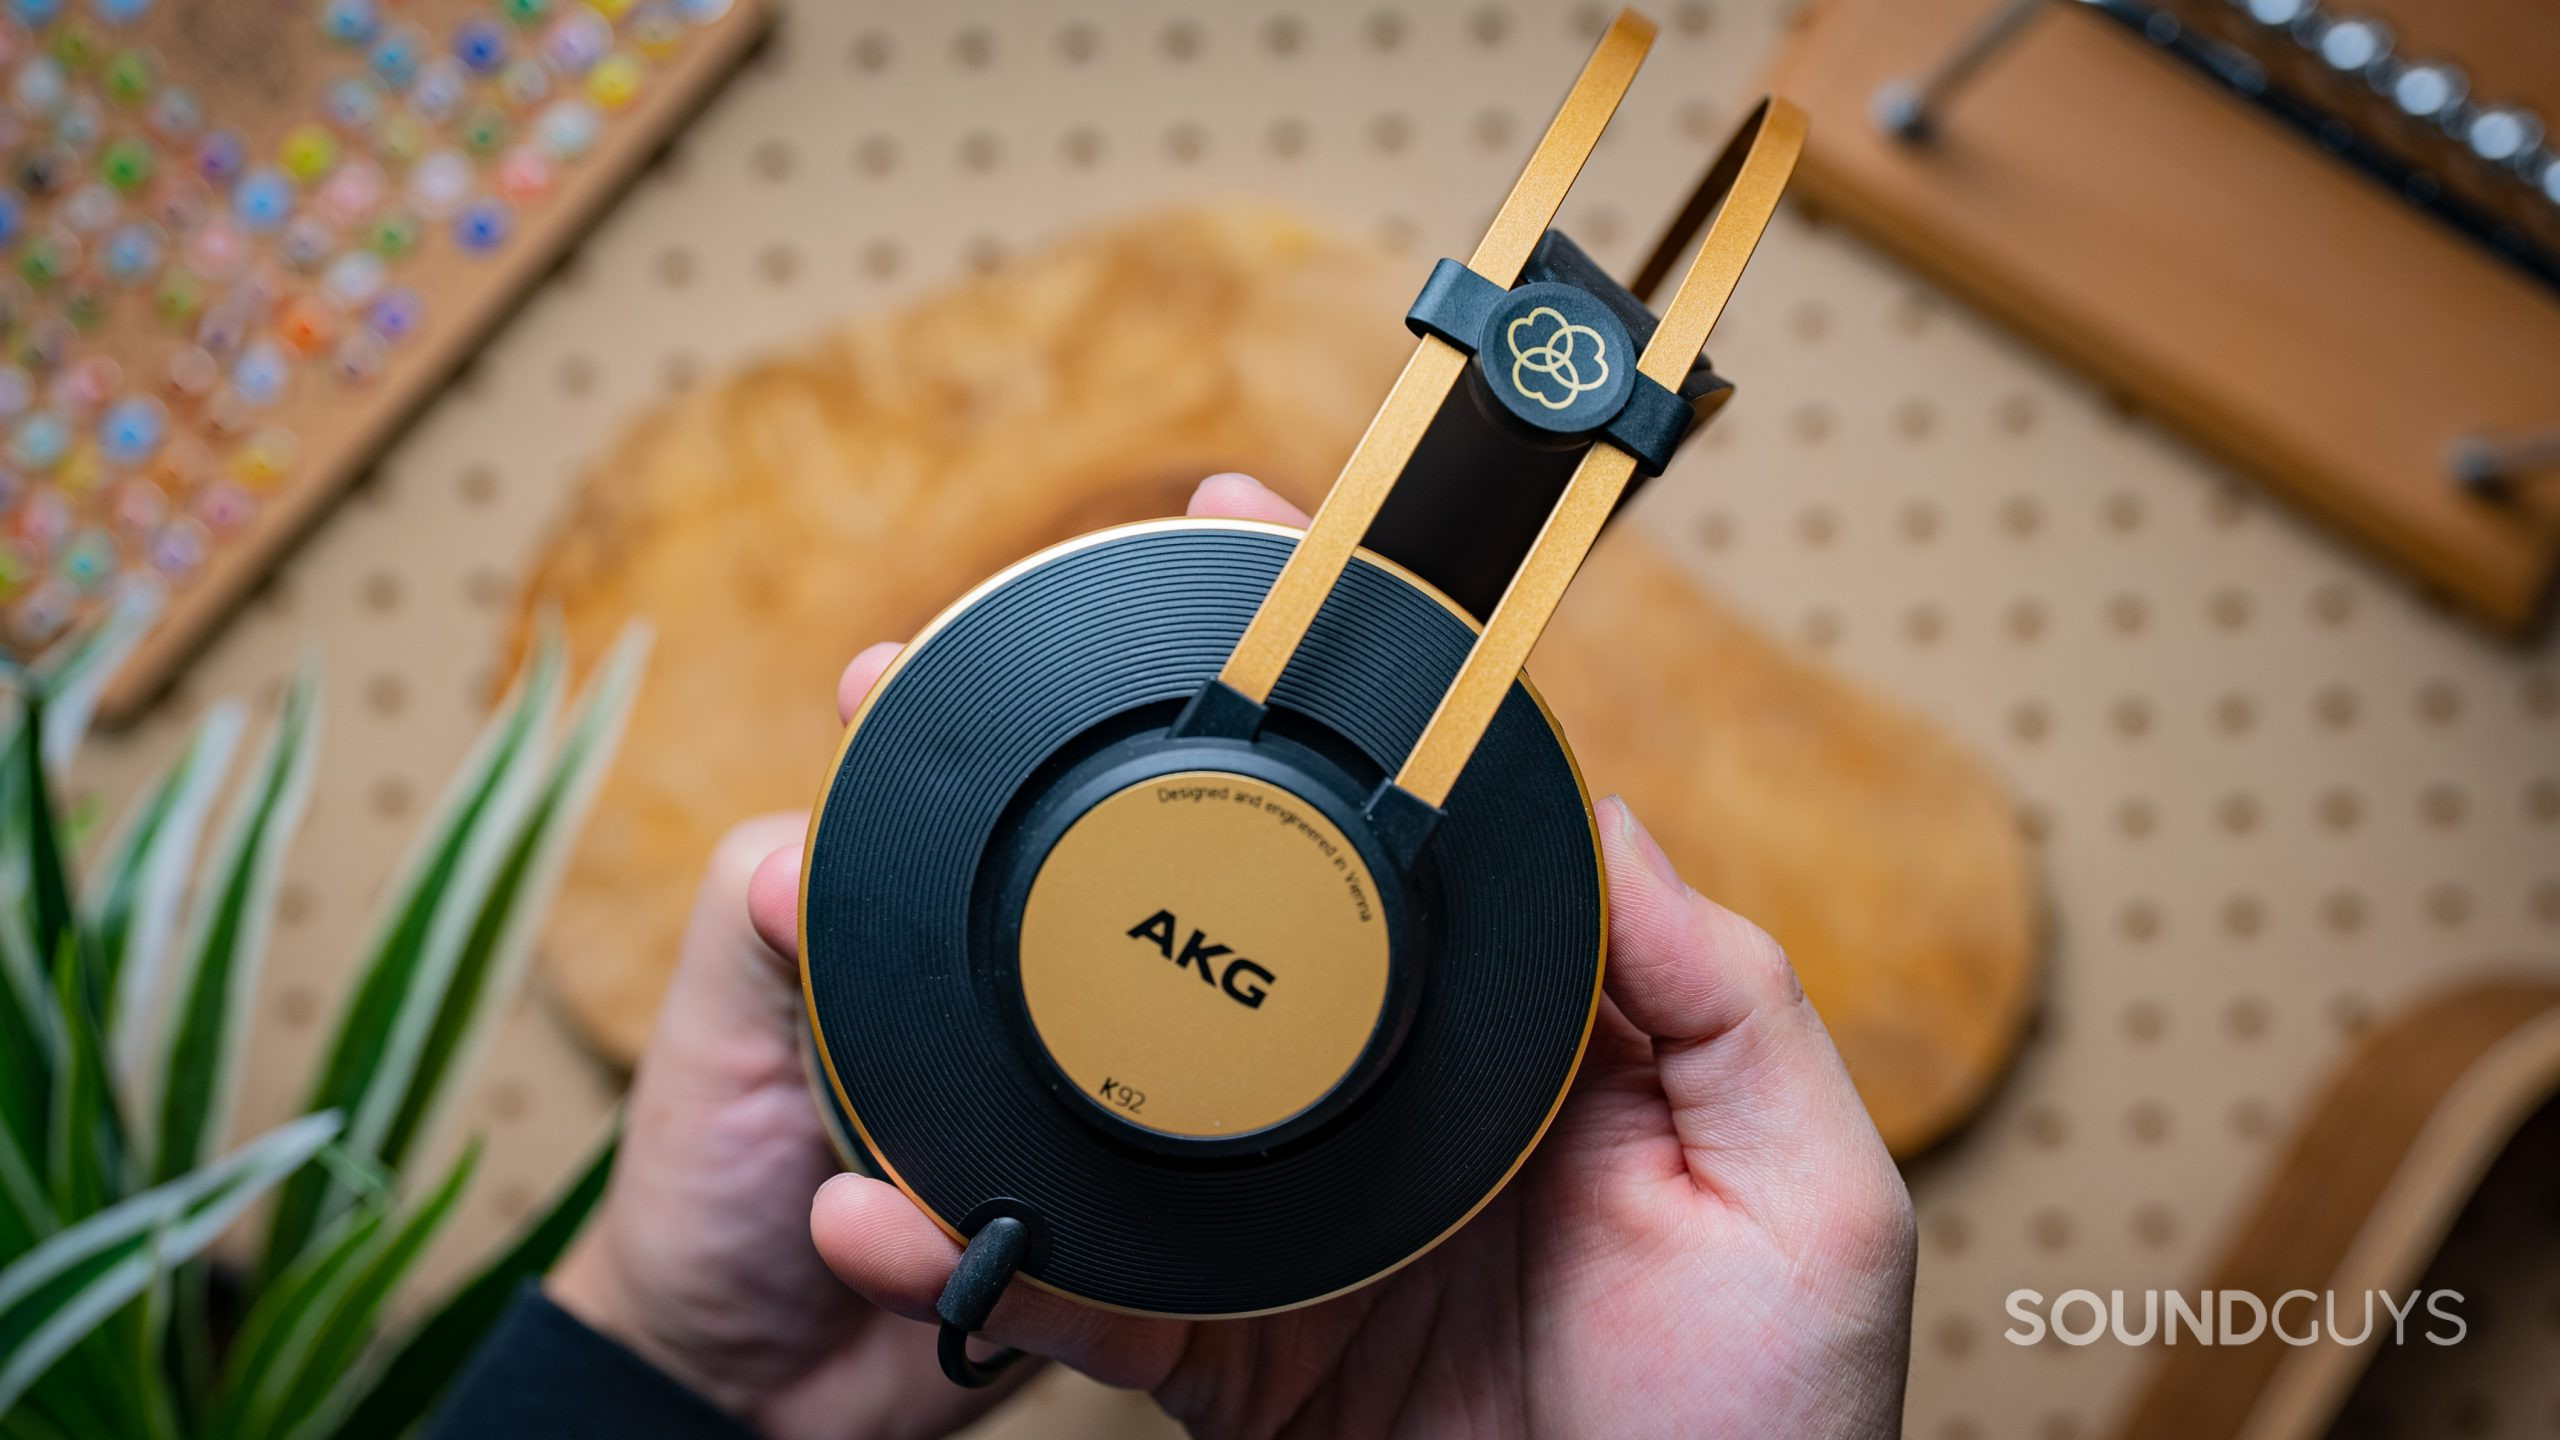 AKG K92 PRO-AUDIO CLOSED-BACK & OVER-EAR HEADPHONES